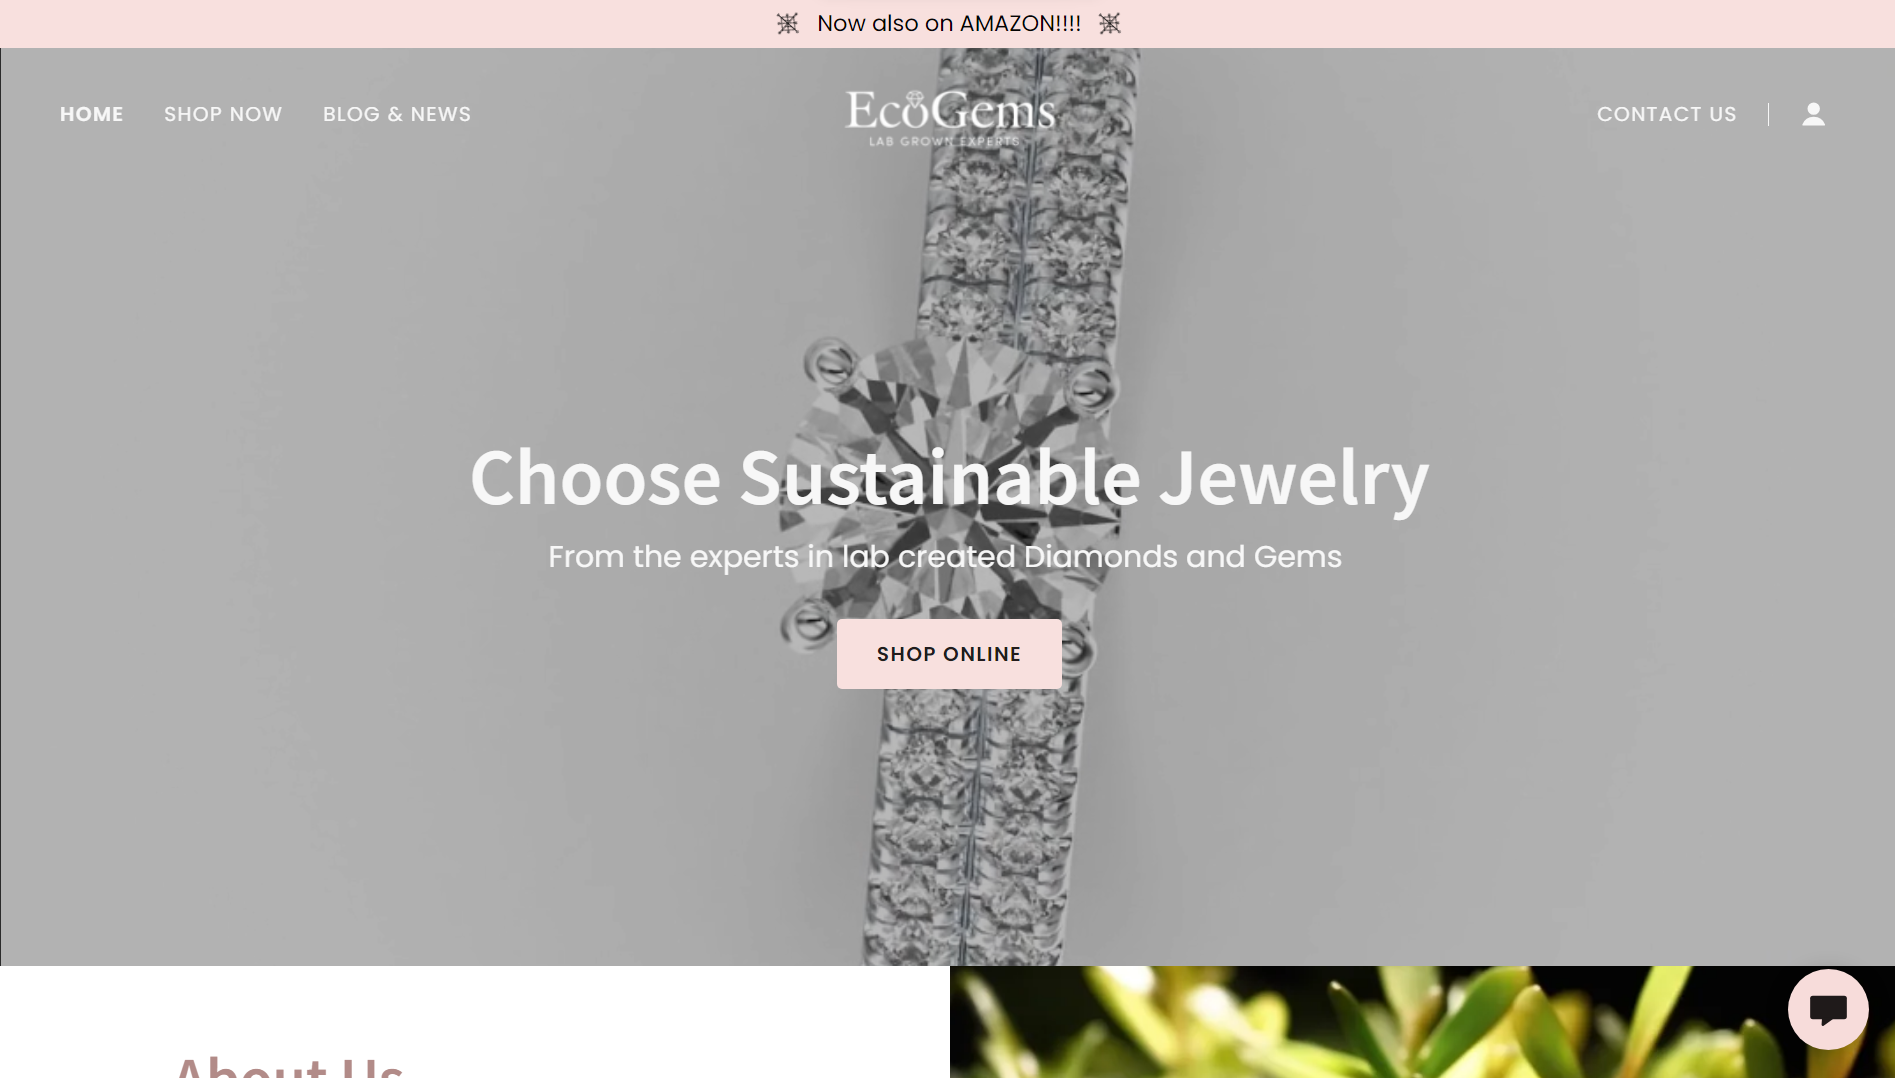 EcoGems Jewelry Website